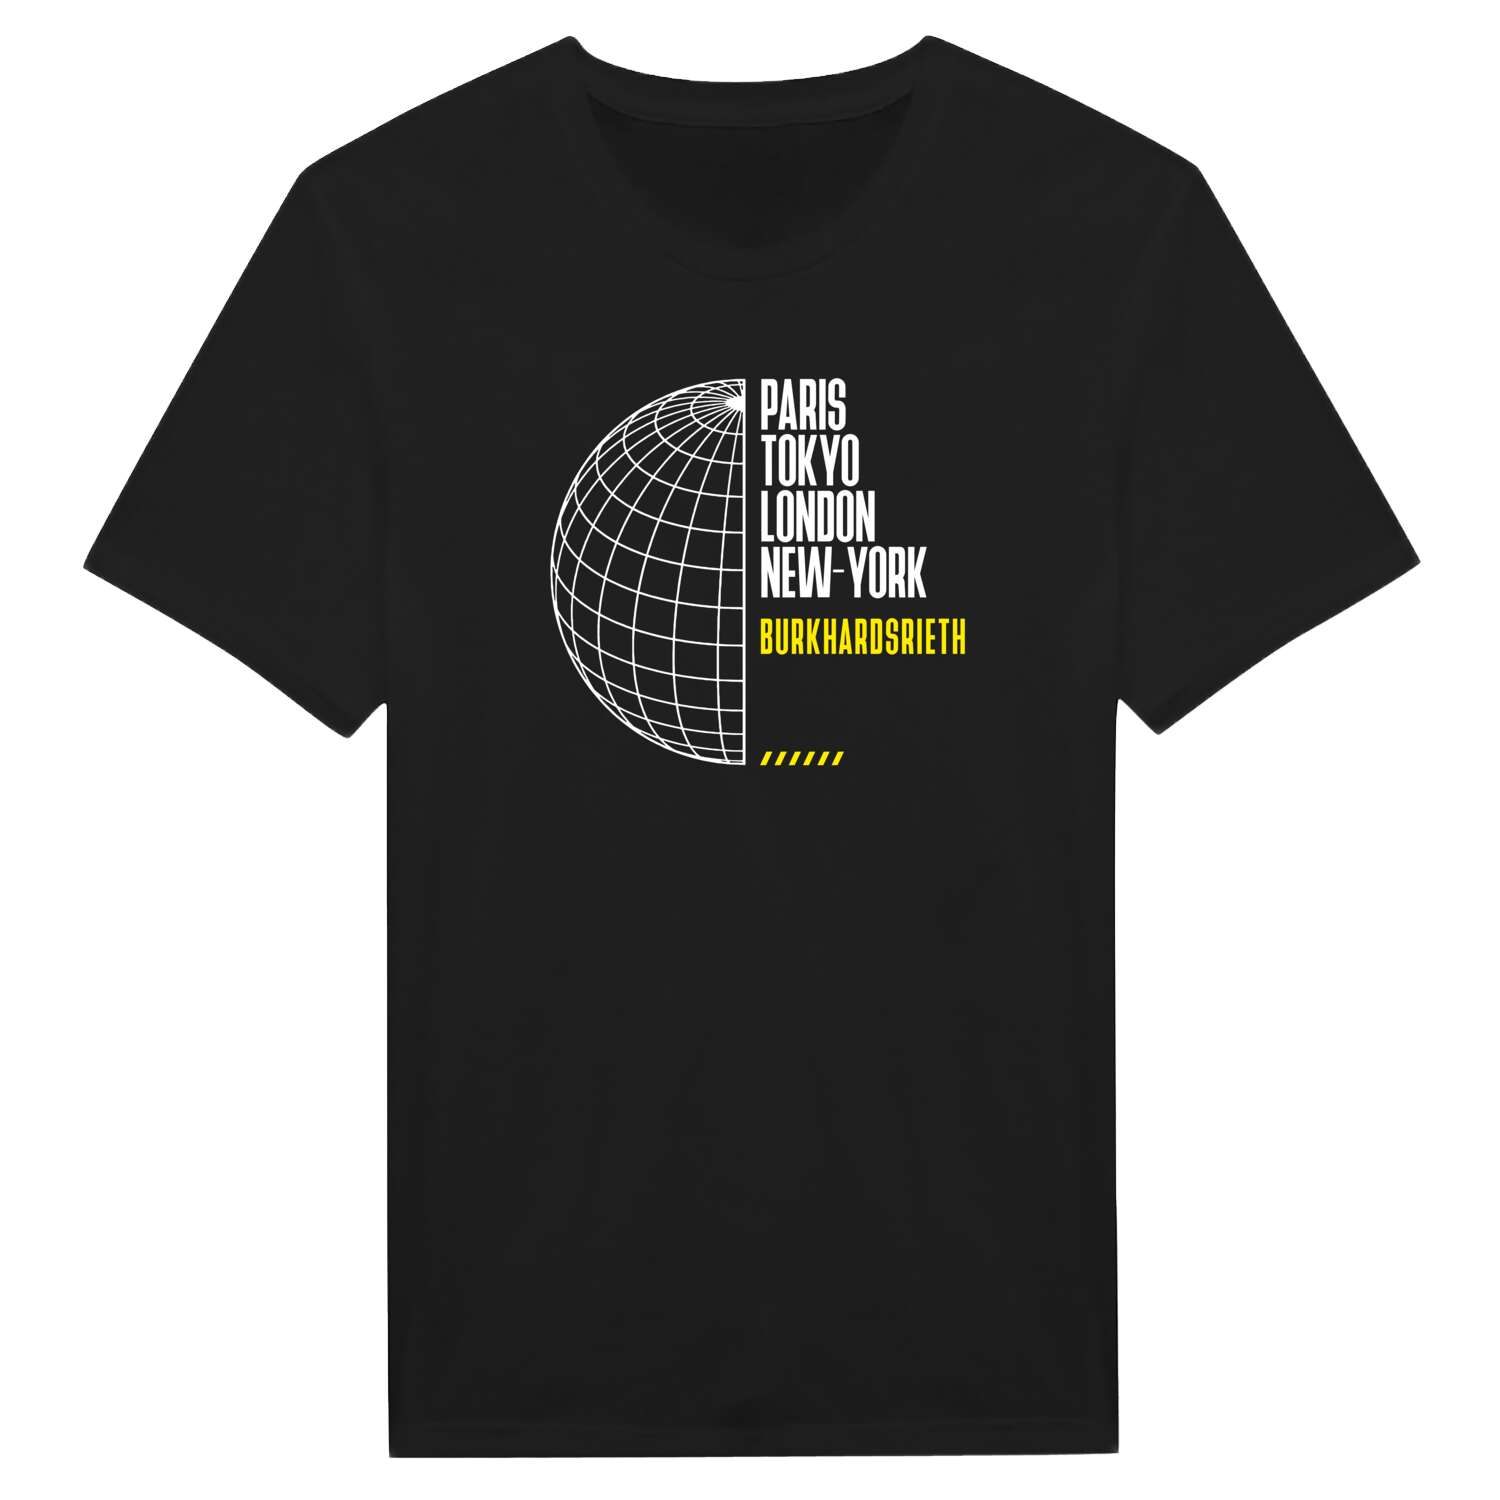 Burkhardsrieth T-Shirt »Paris Tokyo London«